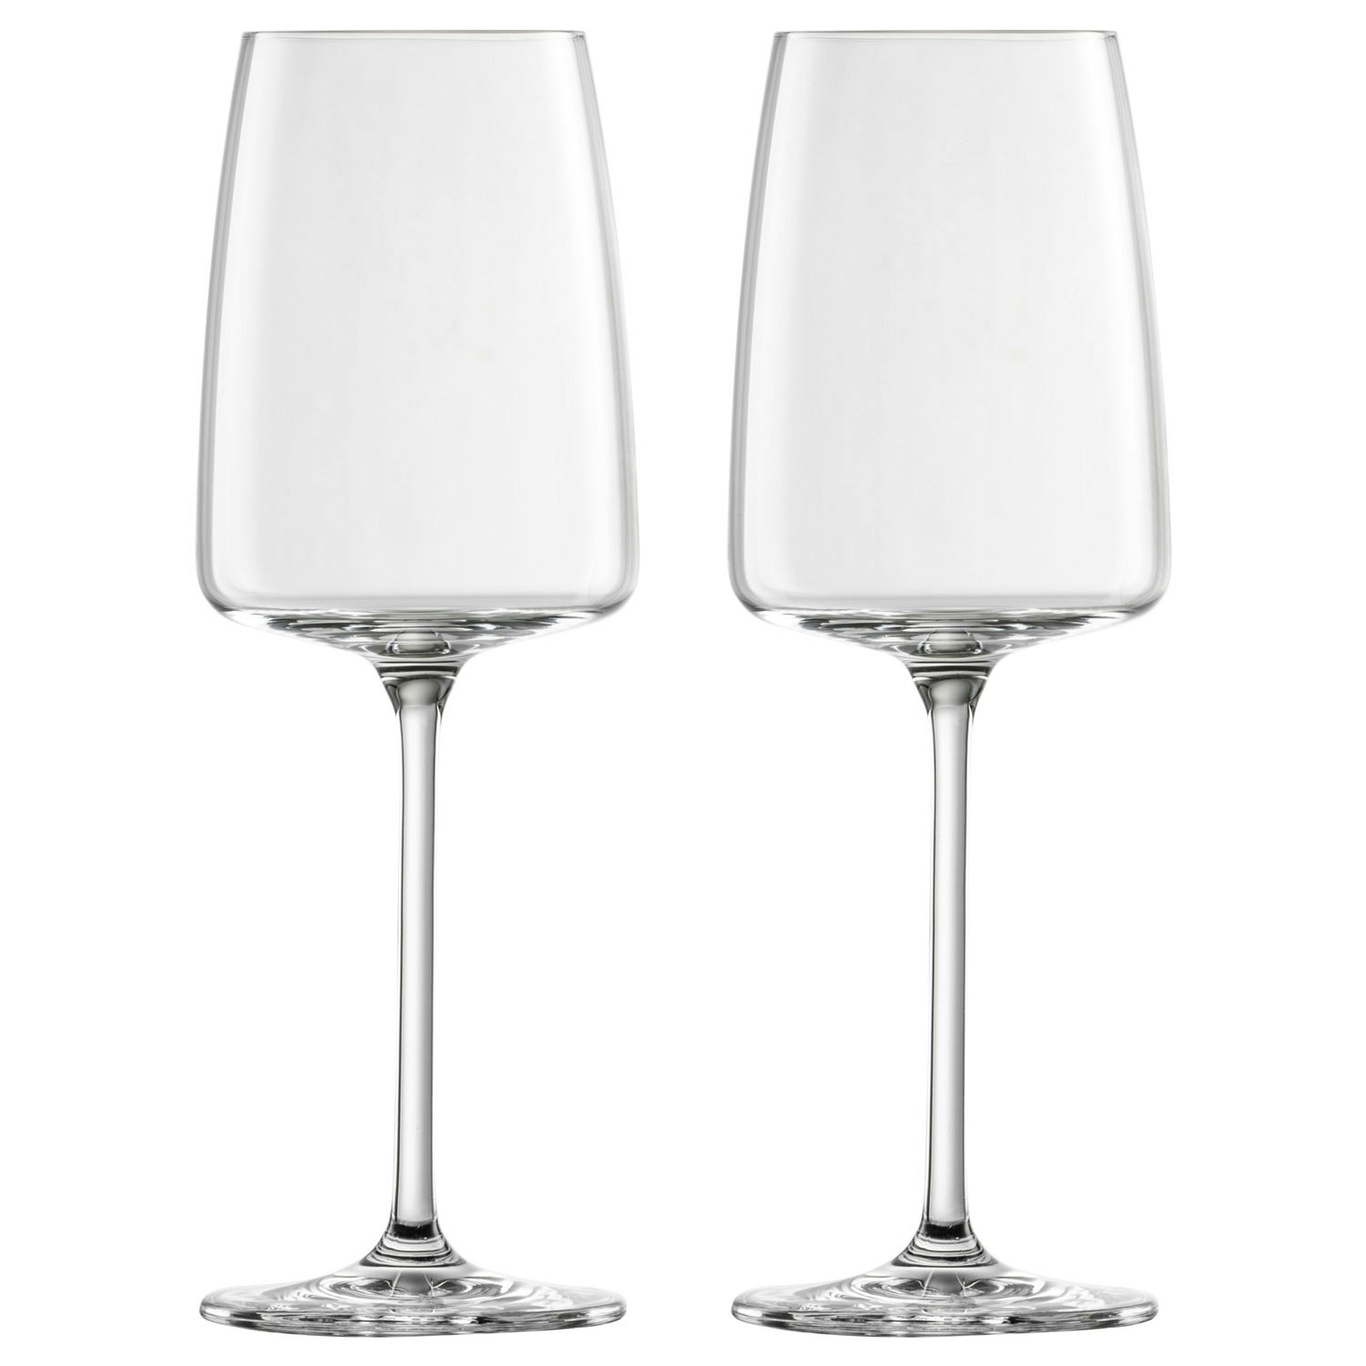 https://royaldesign.com/image/2/zwiesel-vivid-senses-light-fresh-wine-glass-36-cl-2-pack-0?w=800&quality=80